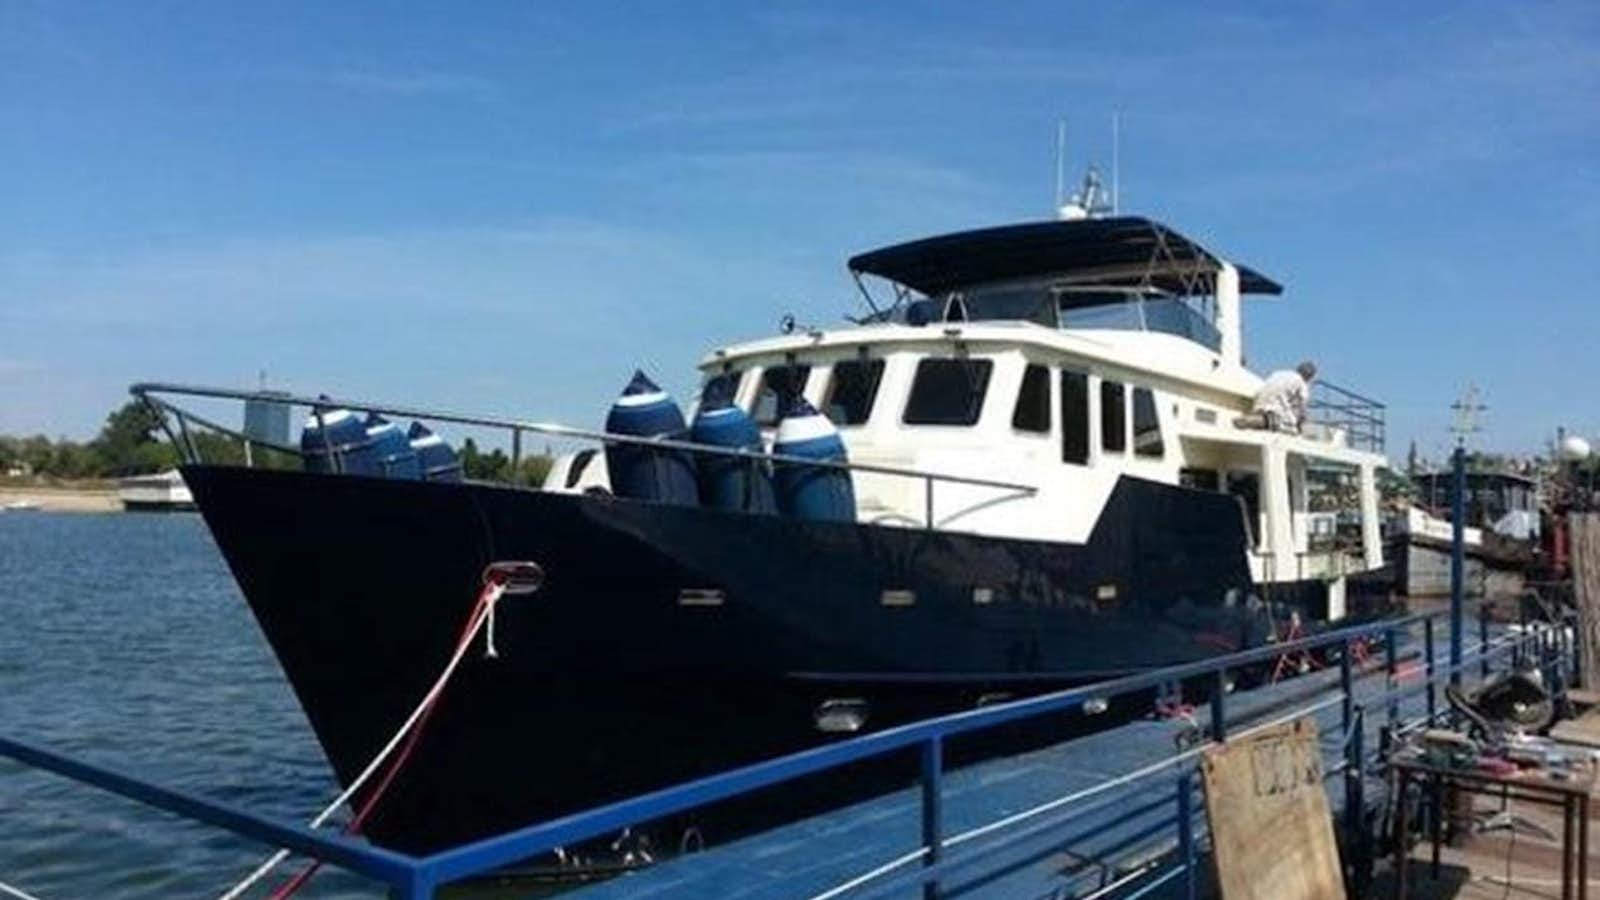 2013 tavros trawler 57
Yacht for Sale